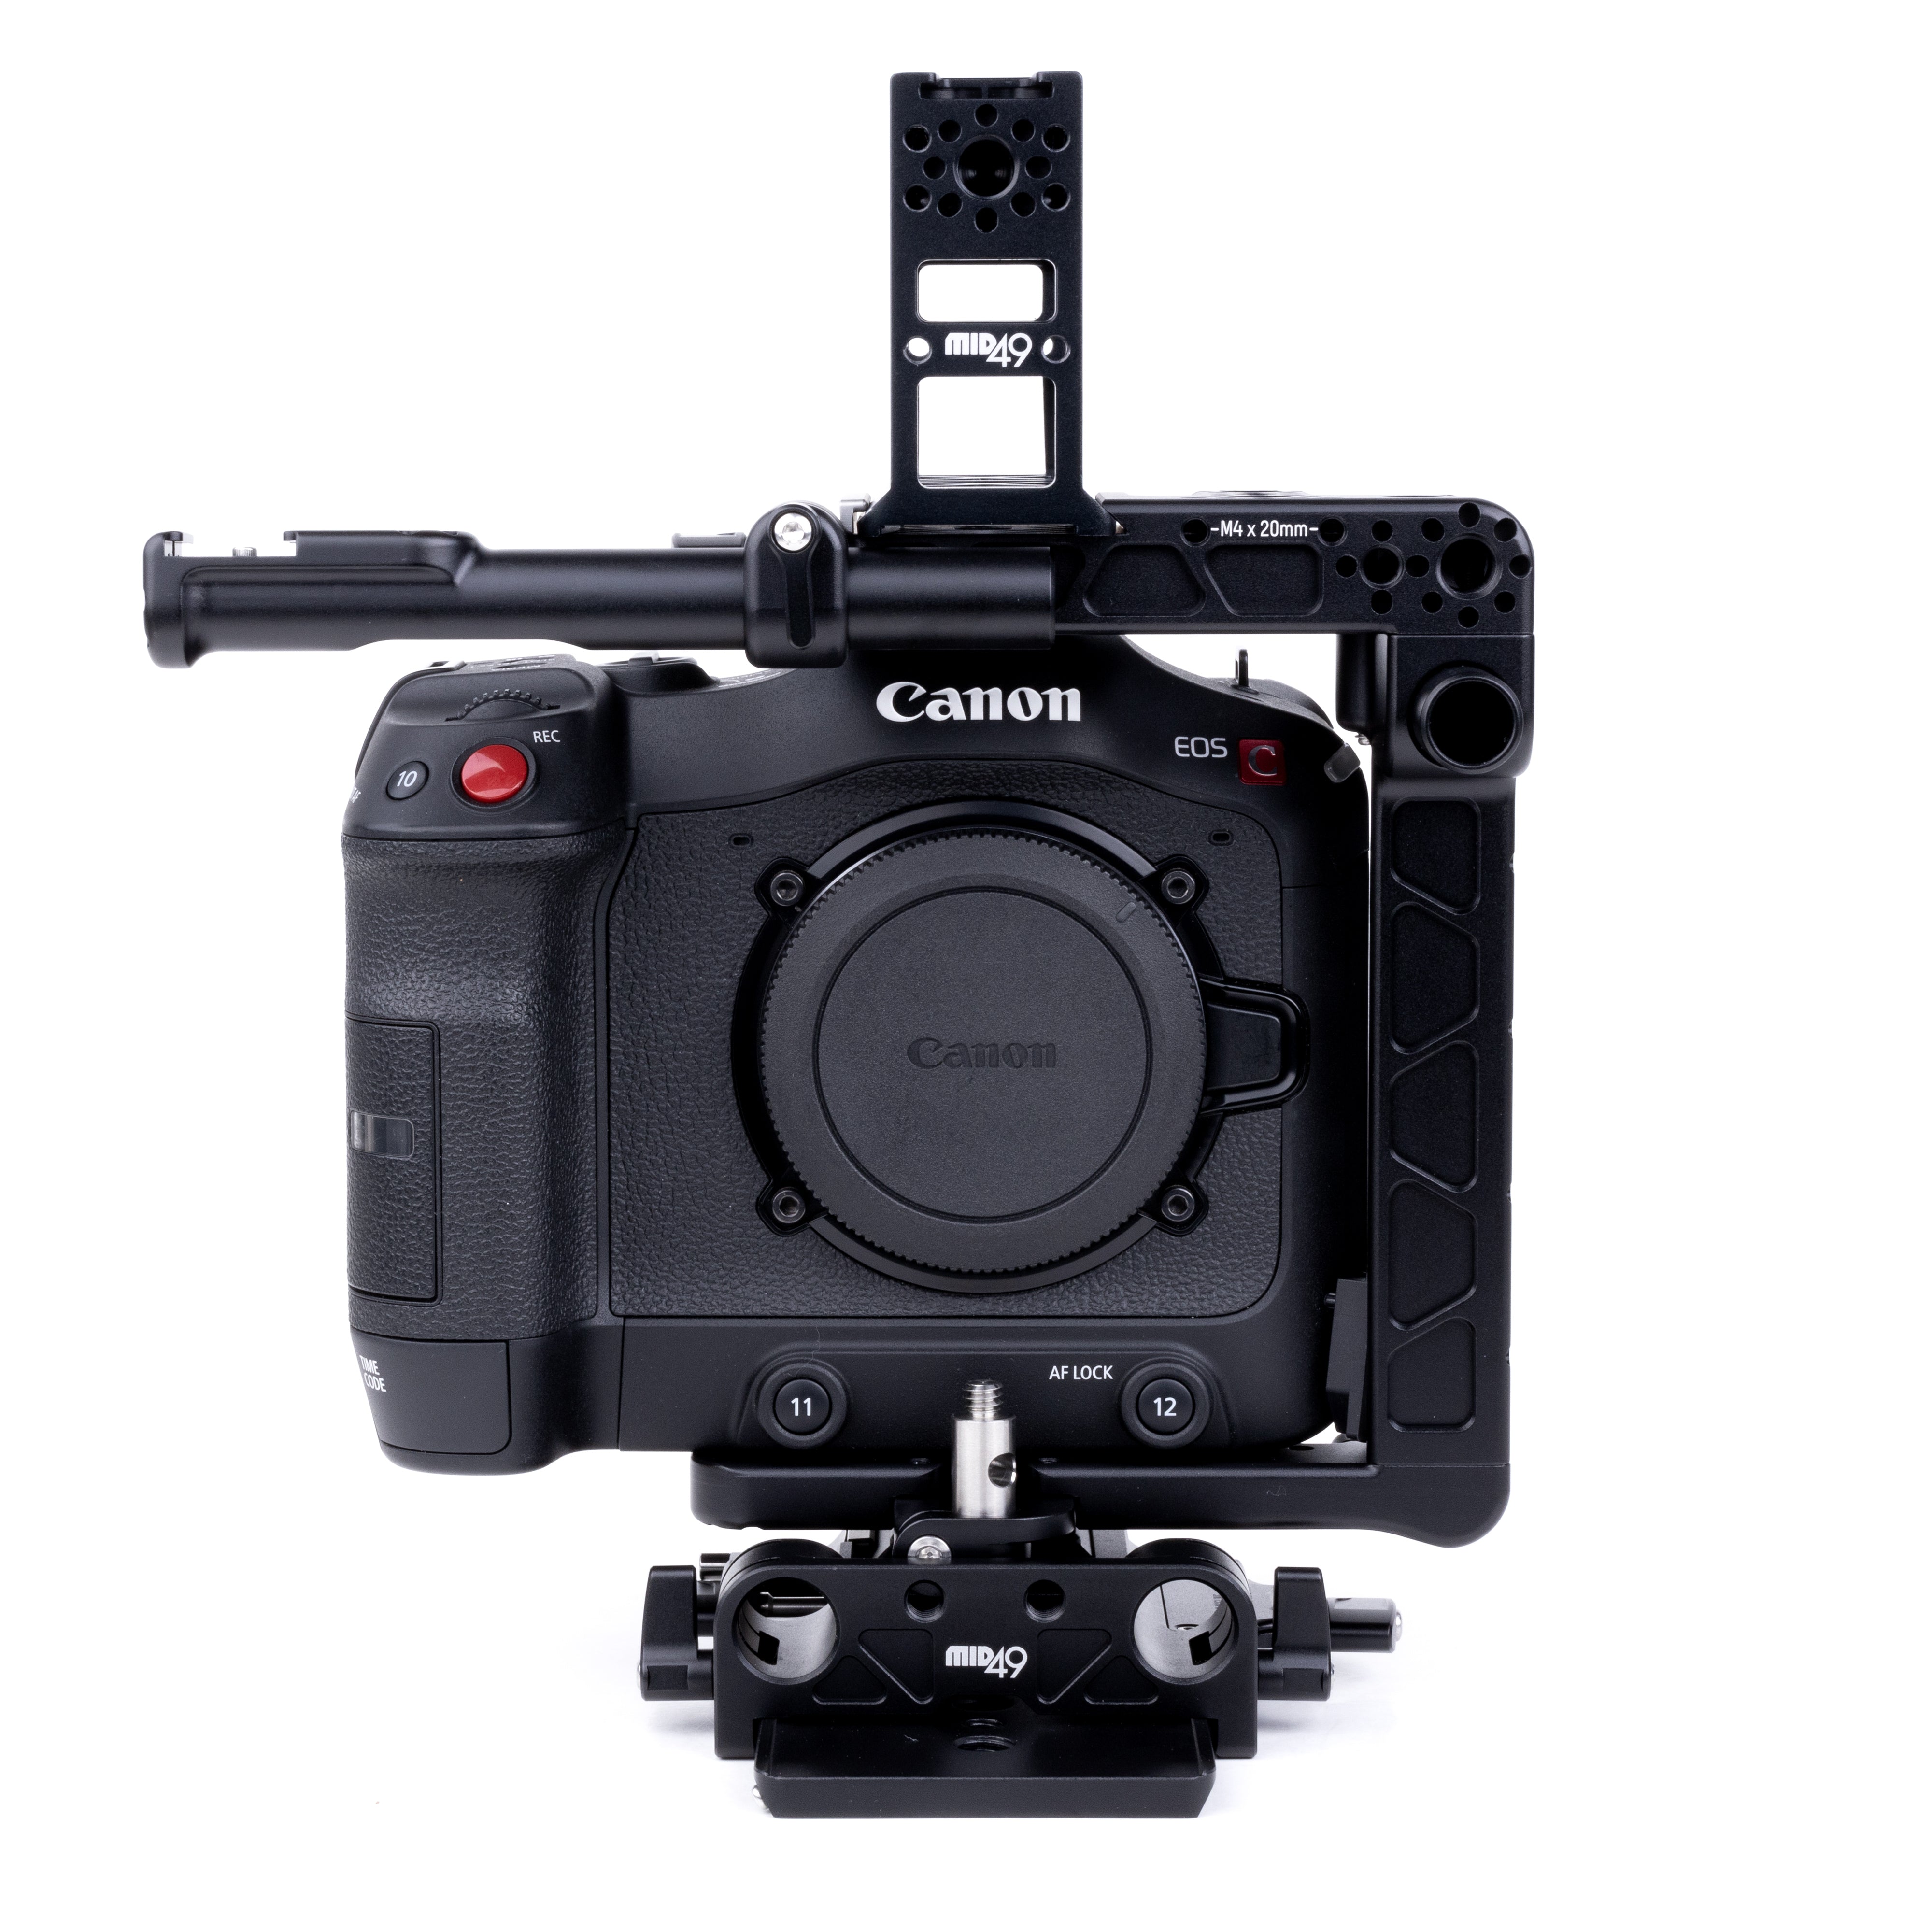 Base Kit for Canon C70